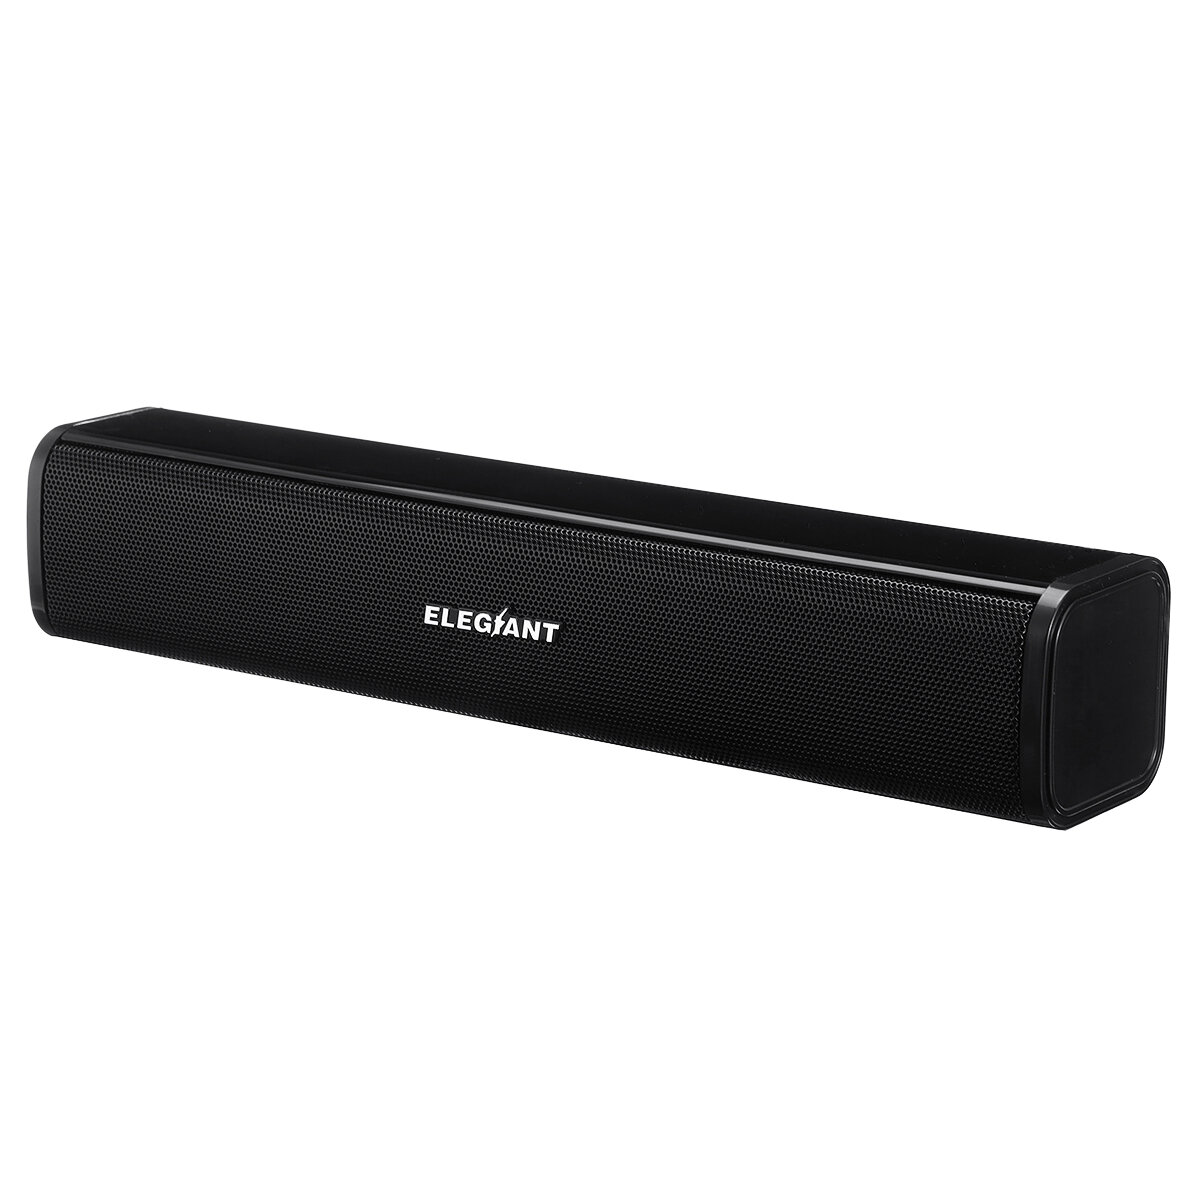 

ELEGIANT SR050 6W Powerful Multimedia HiFi Bass Portable USB SoundBar Speakers with Volume Control for PC Desktop